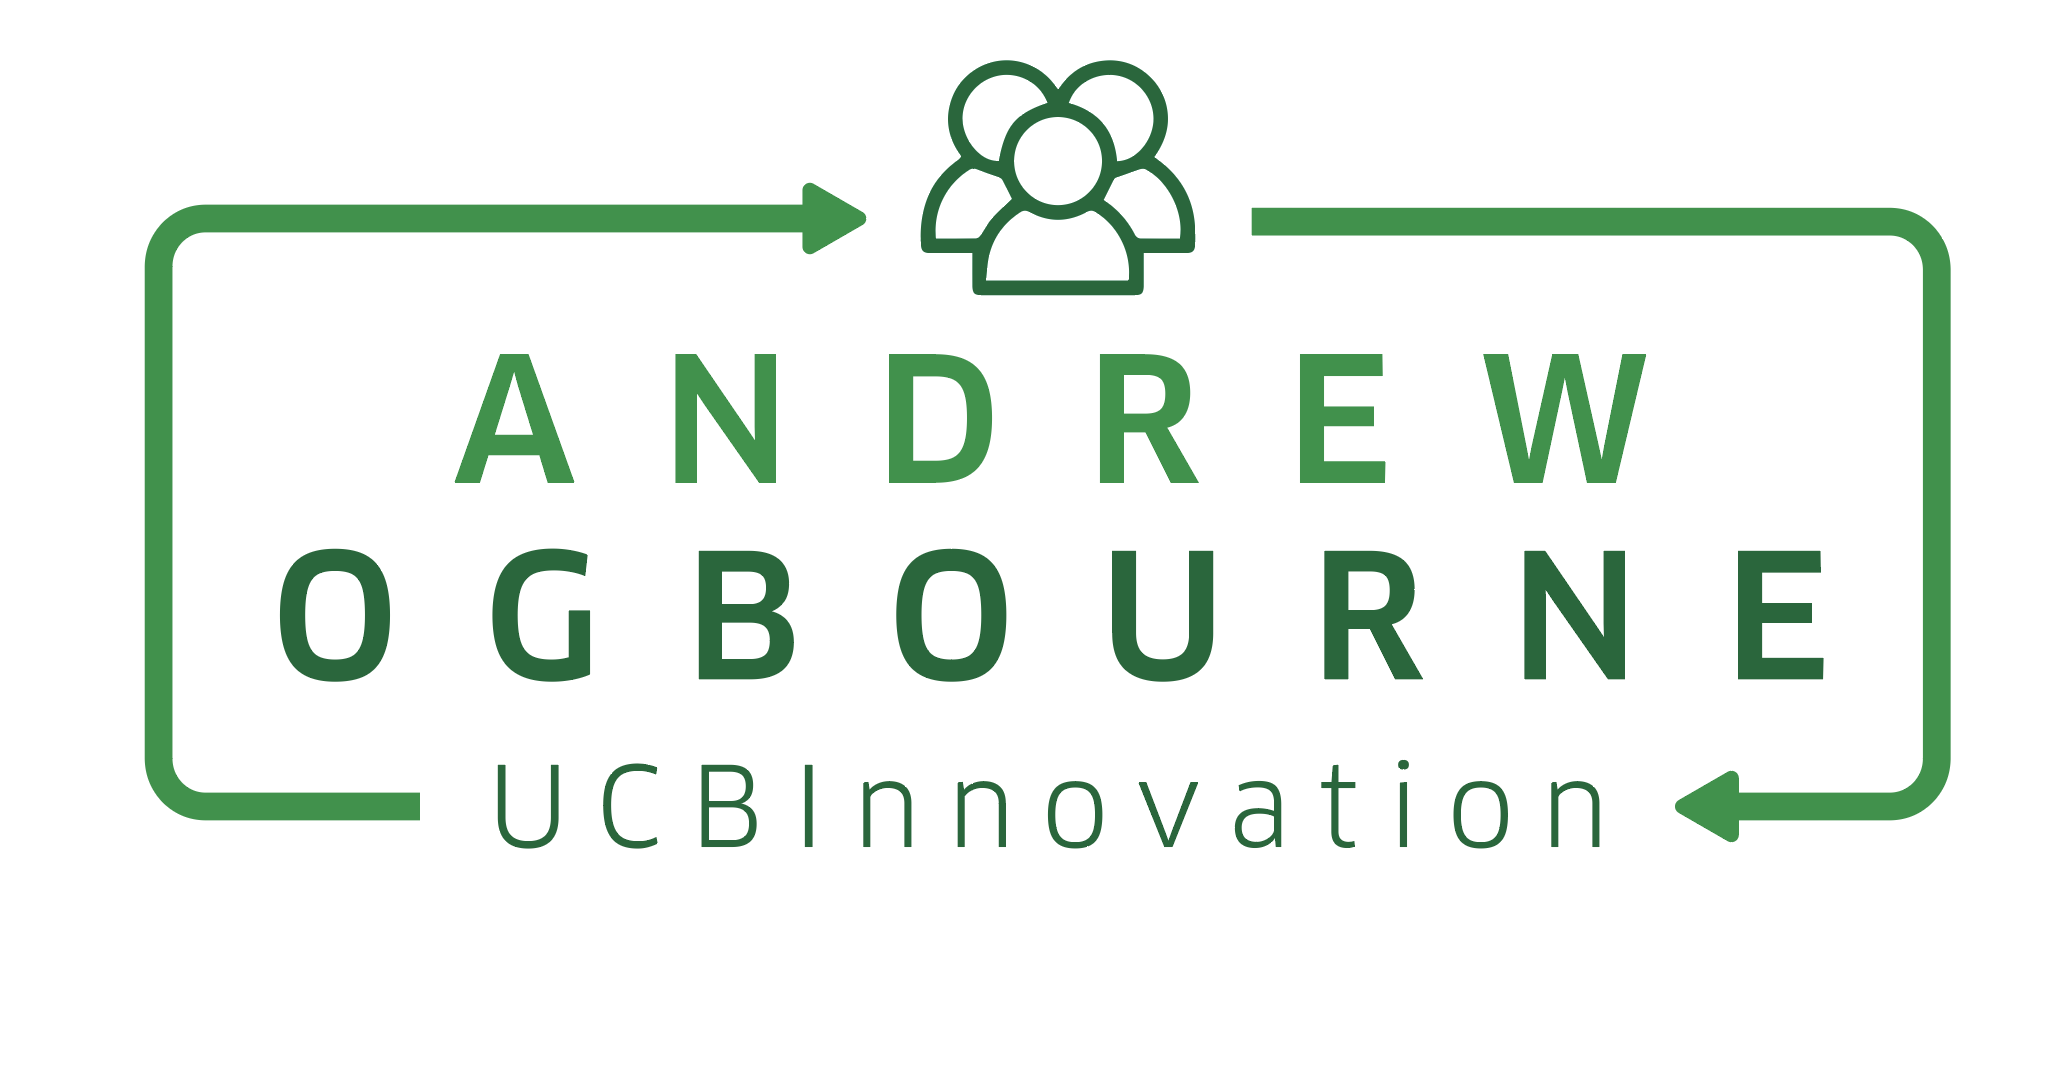 "UCB Innovation - Andrew Ogbourne